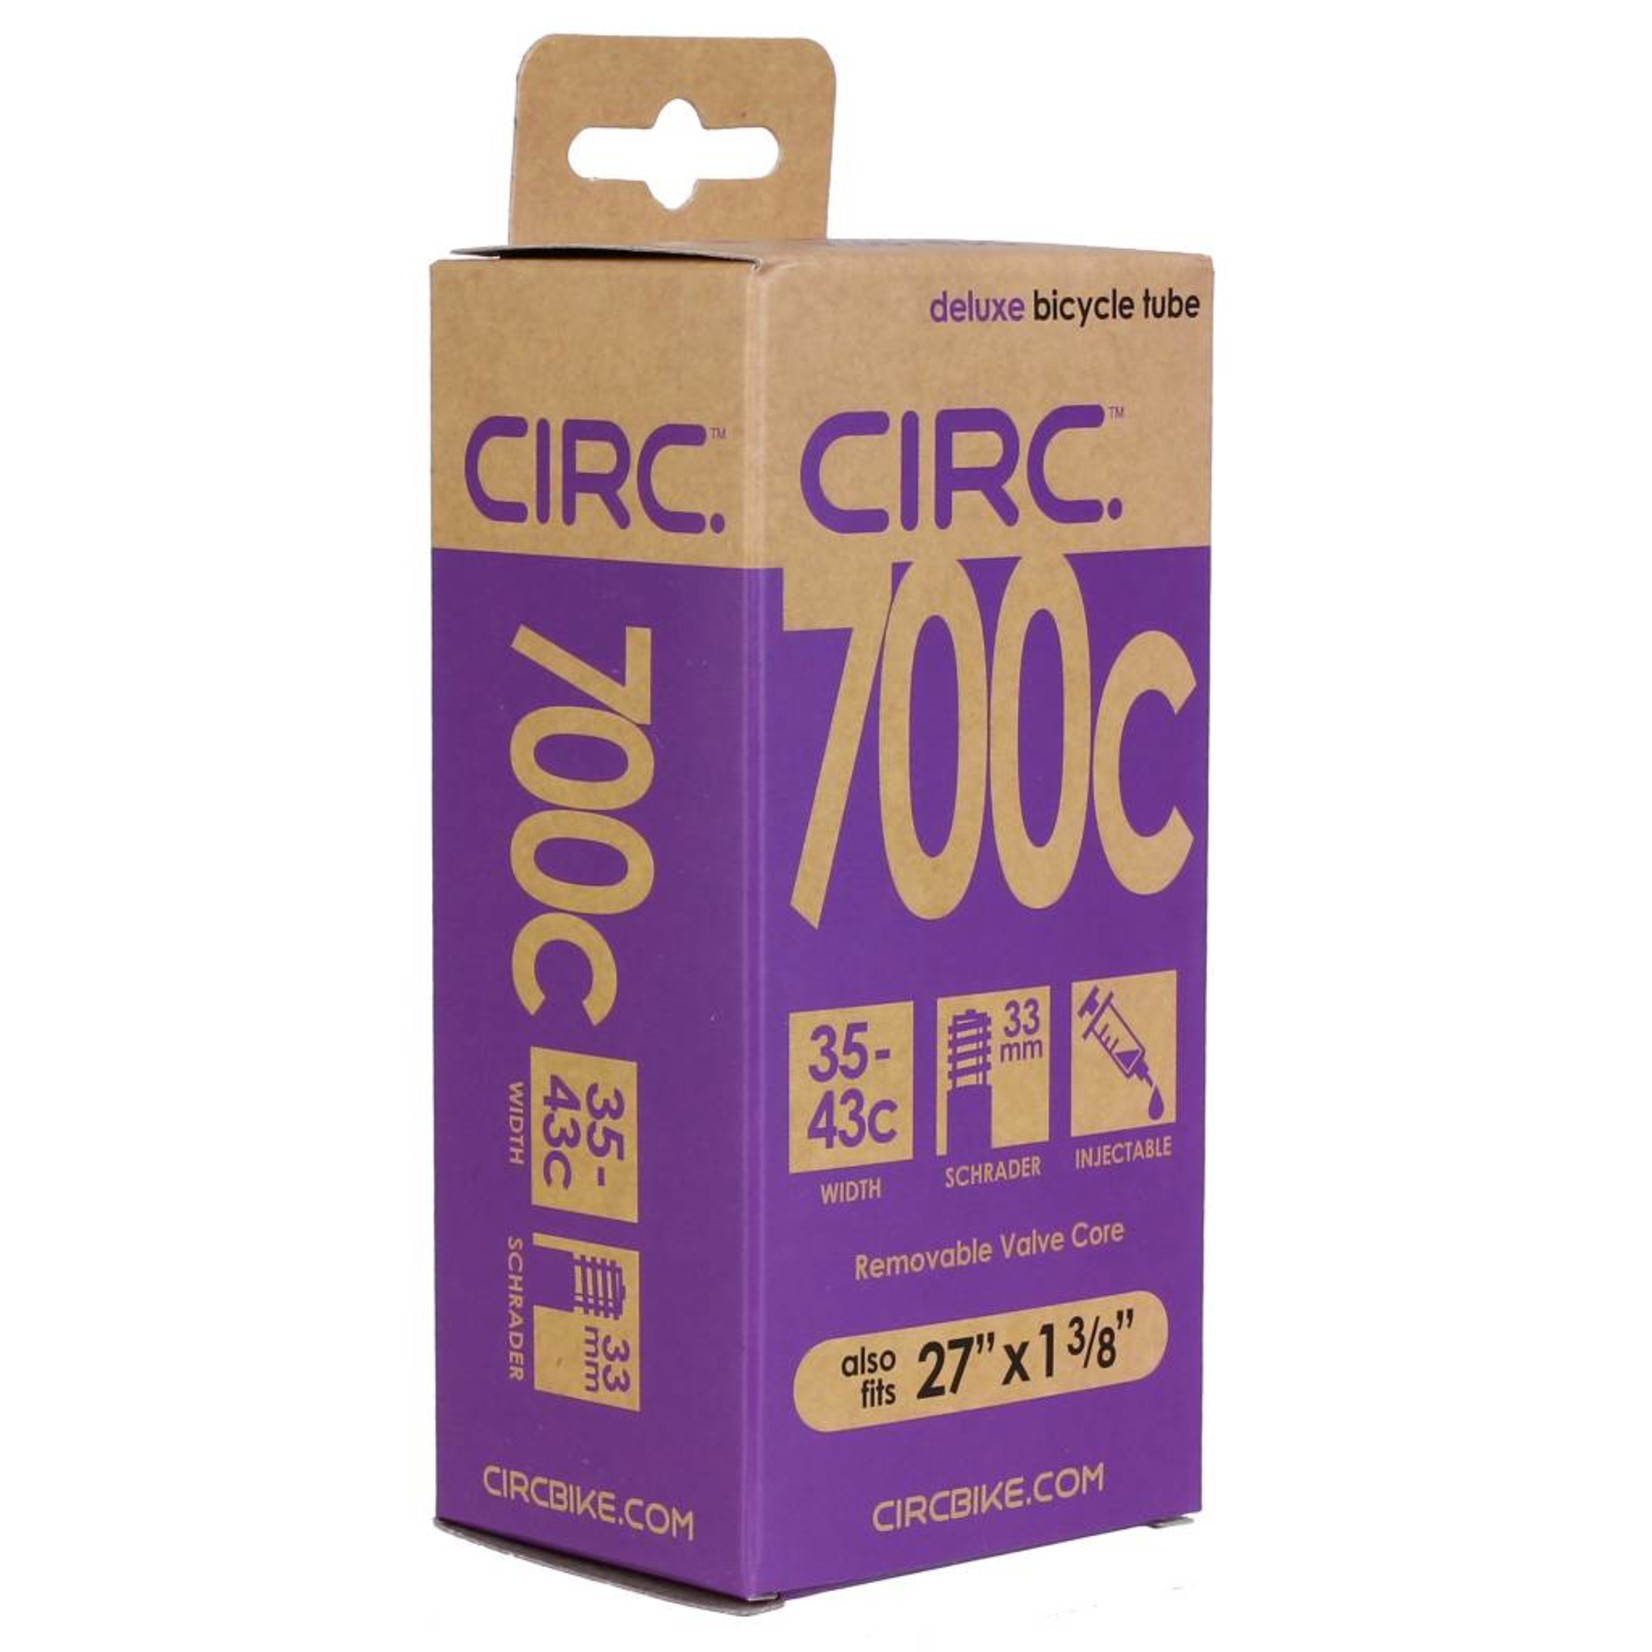 CIRC Circ Deluxe tube, 700x35-43c+27x1-3/8", SV, each